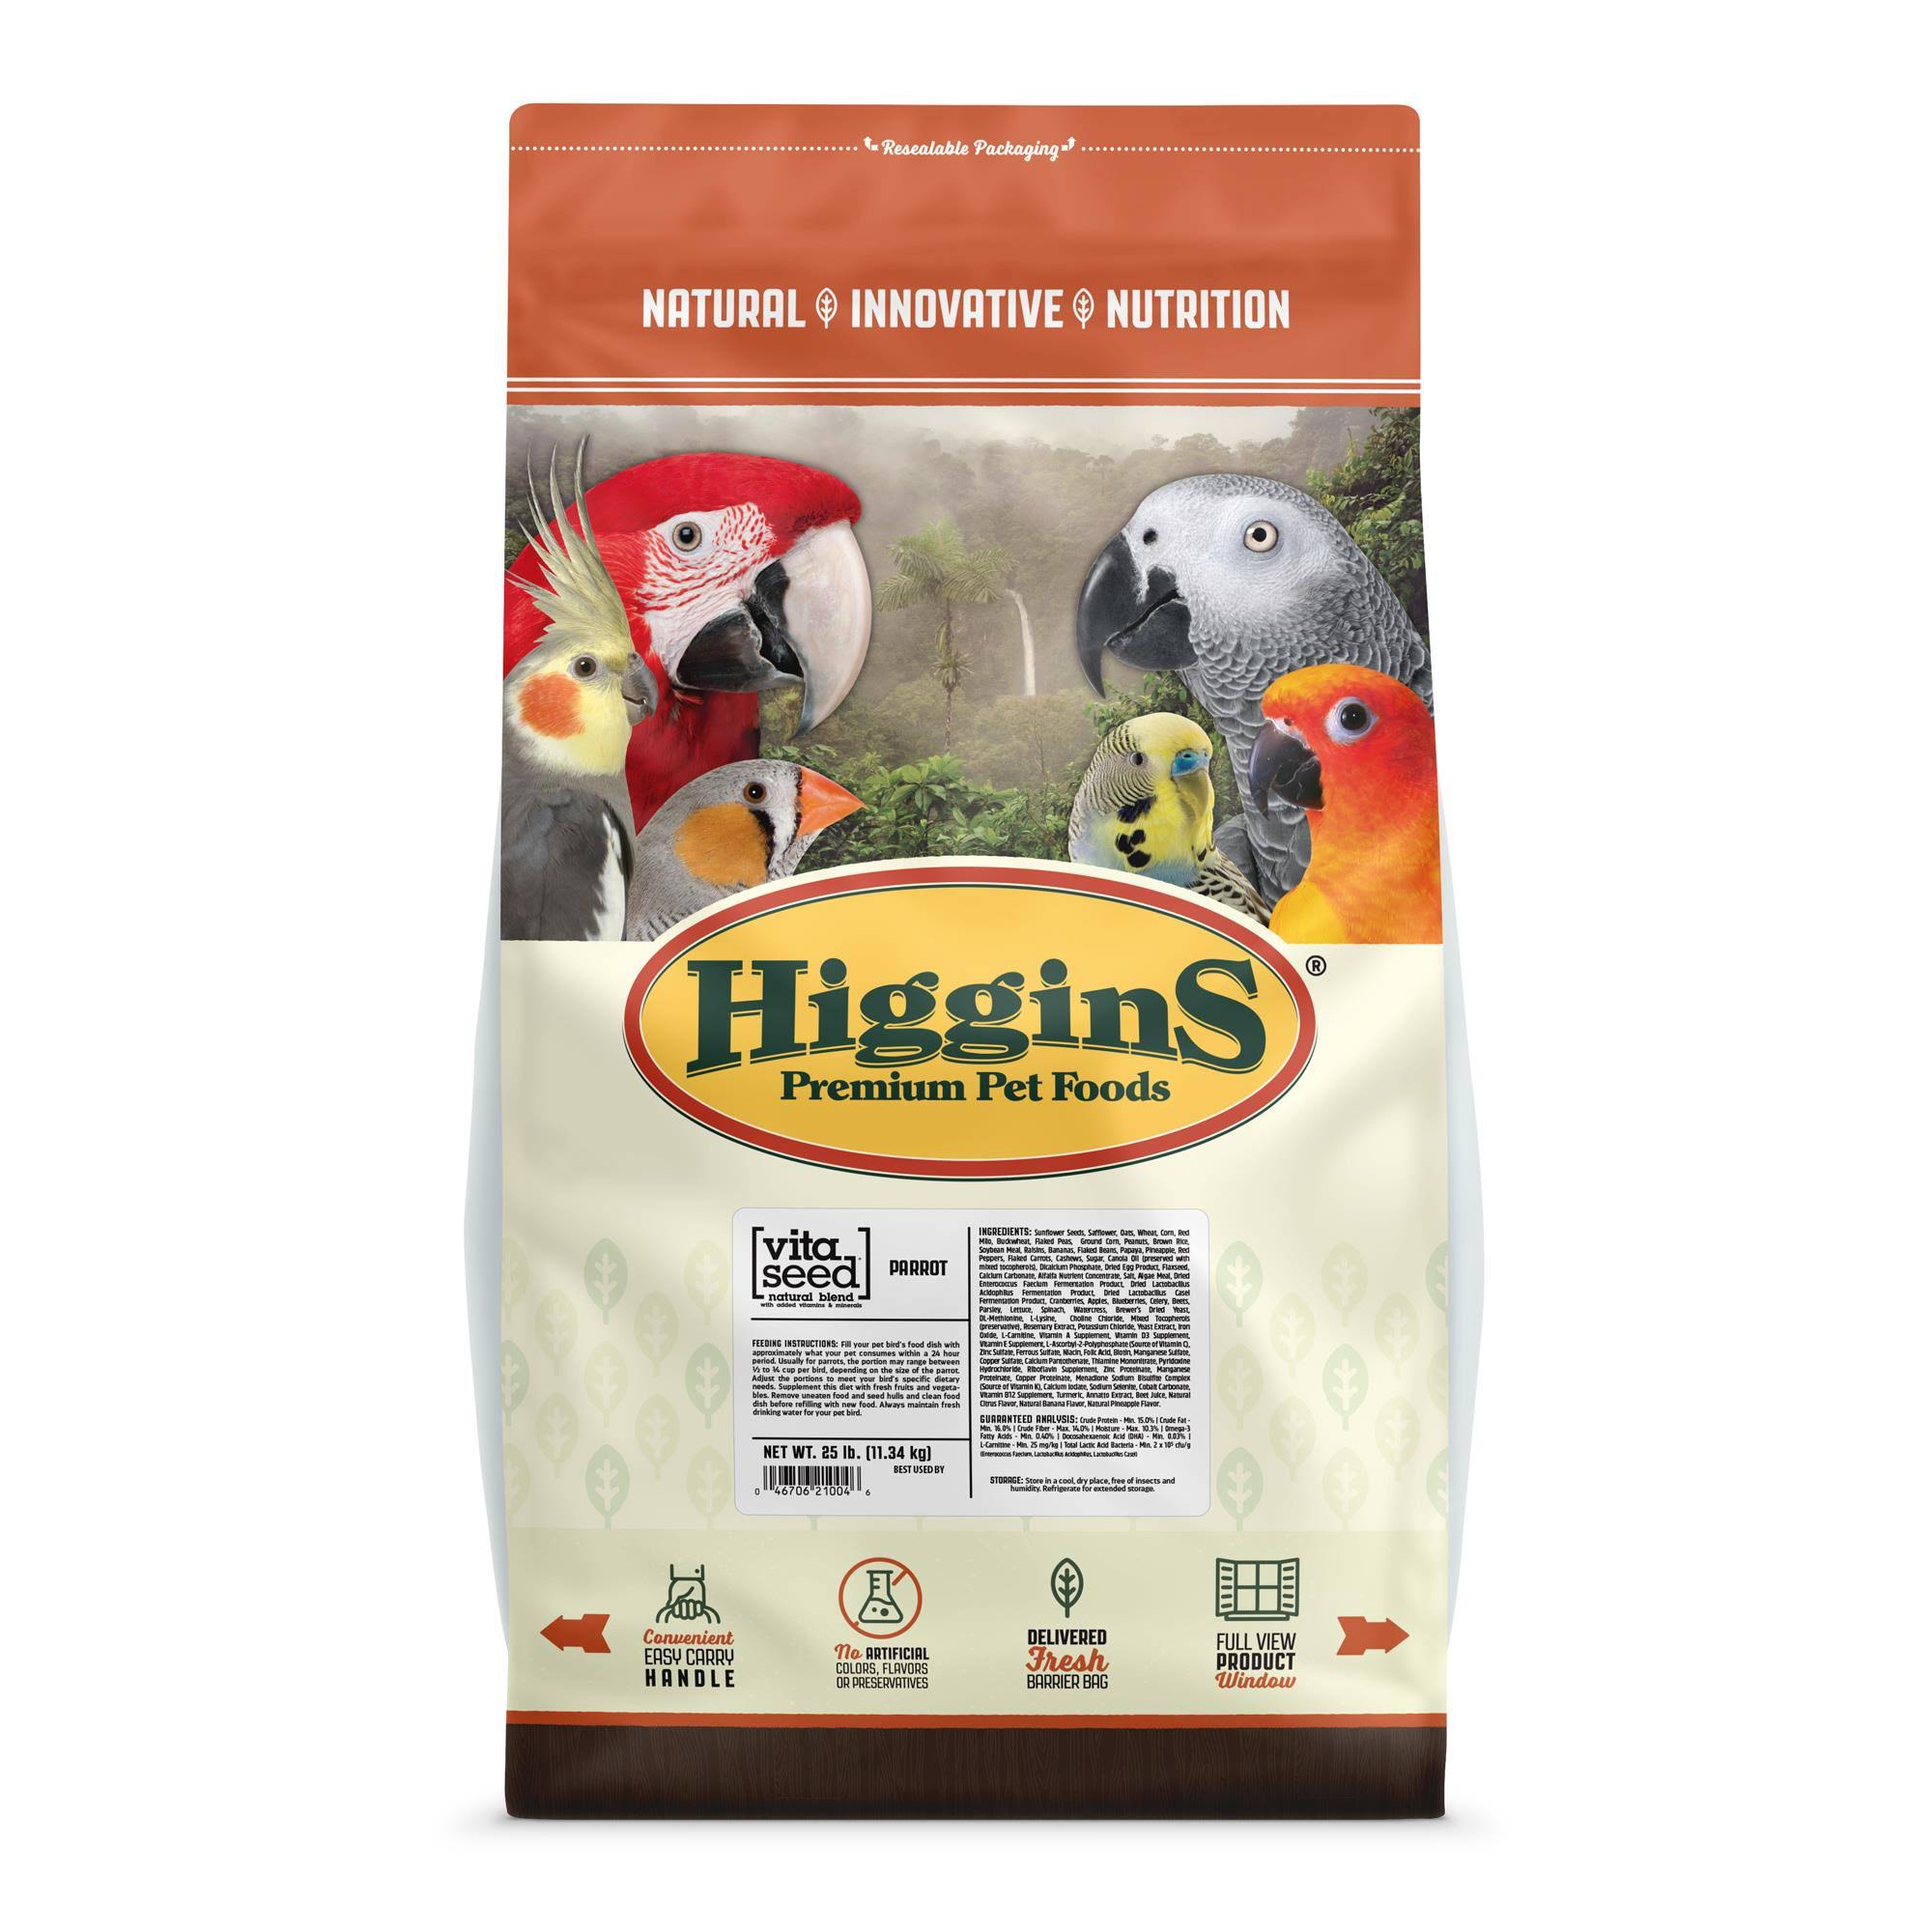 Higgins Vita Seed Parrot Food for Birds - 25lbs